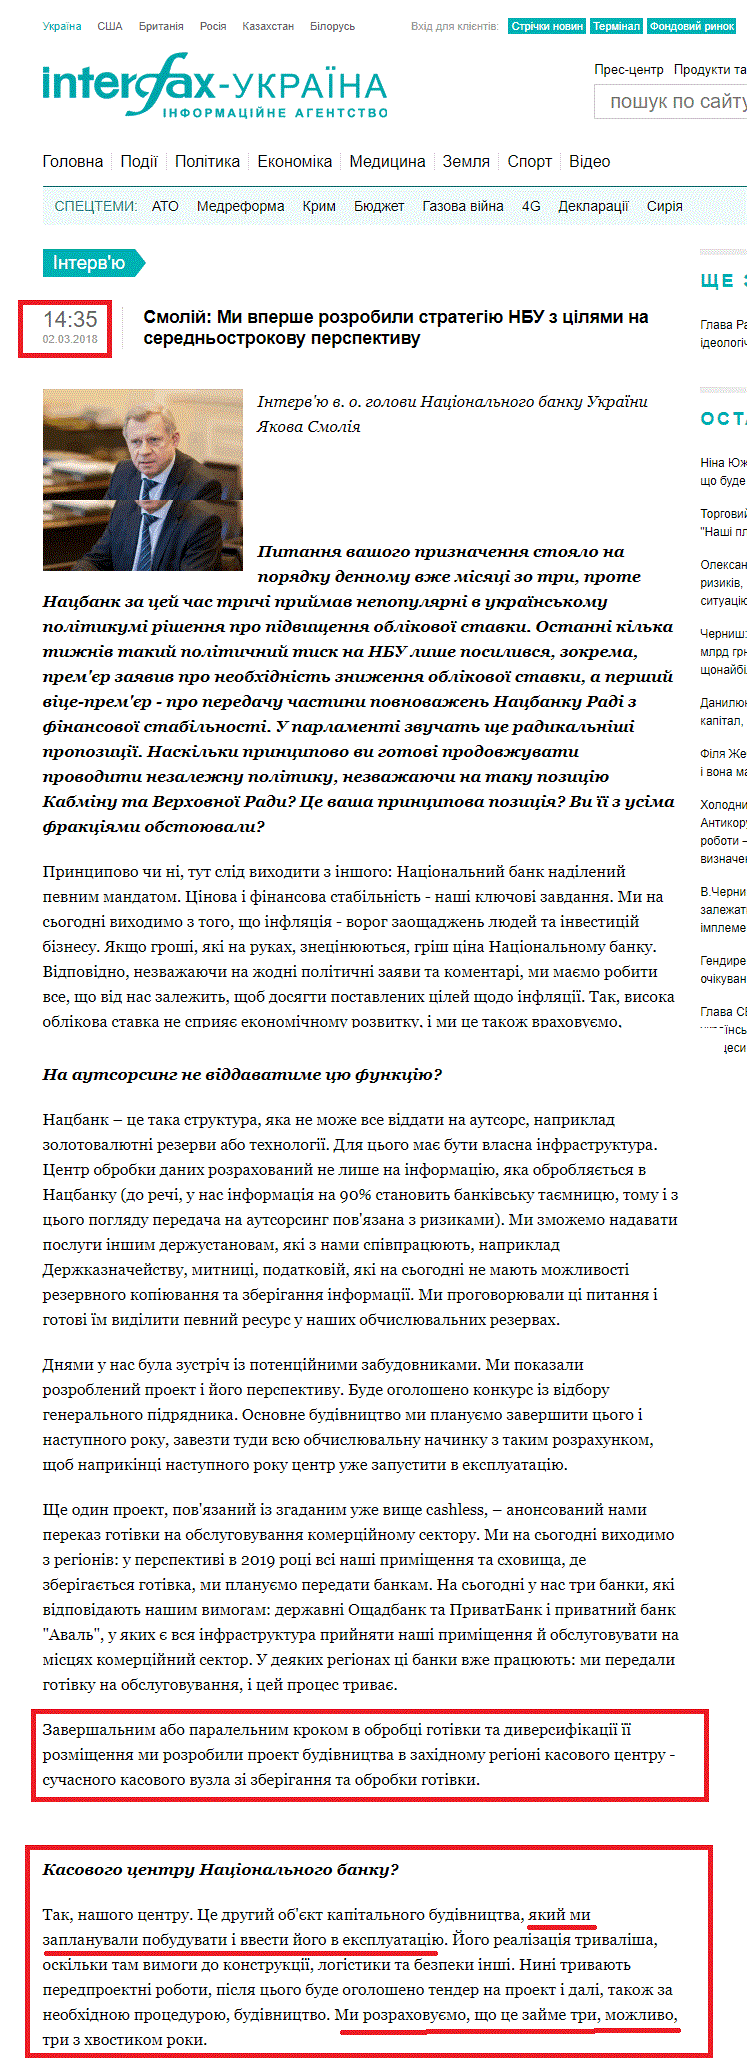 https://ua.interfax.com.ua/news/interview/489186.html